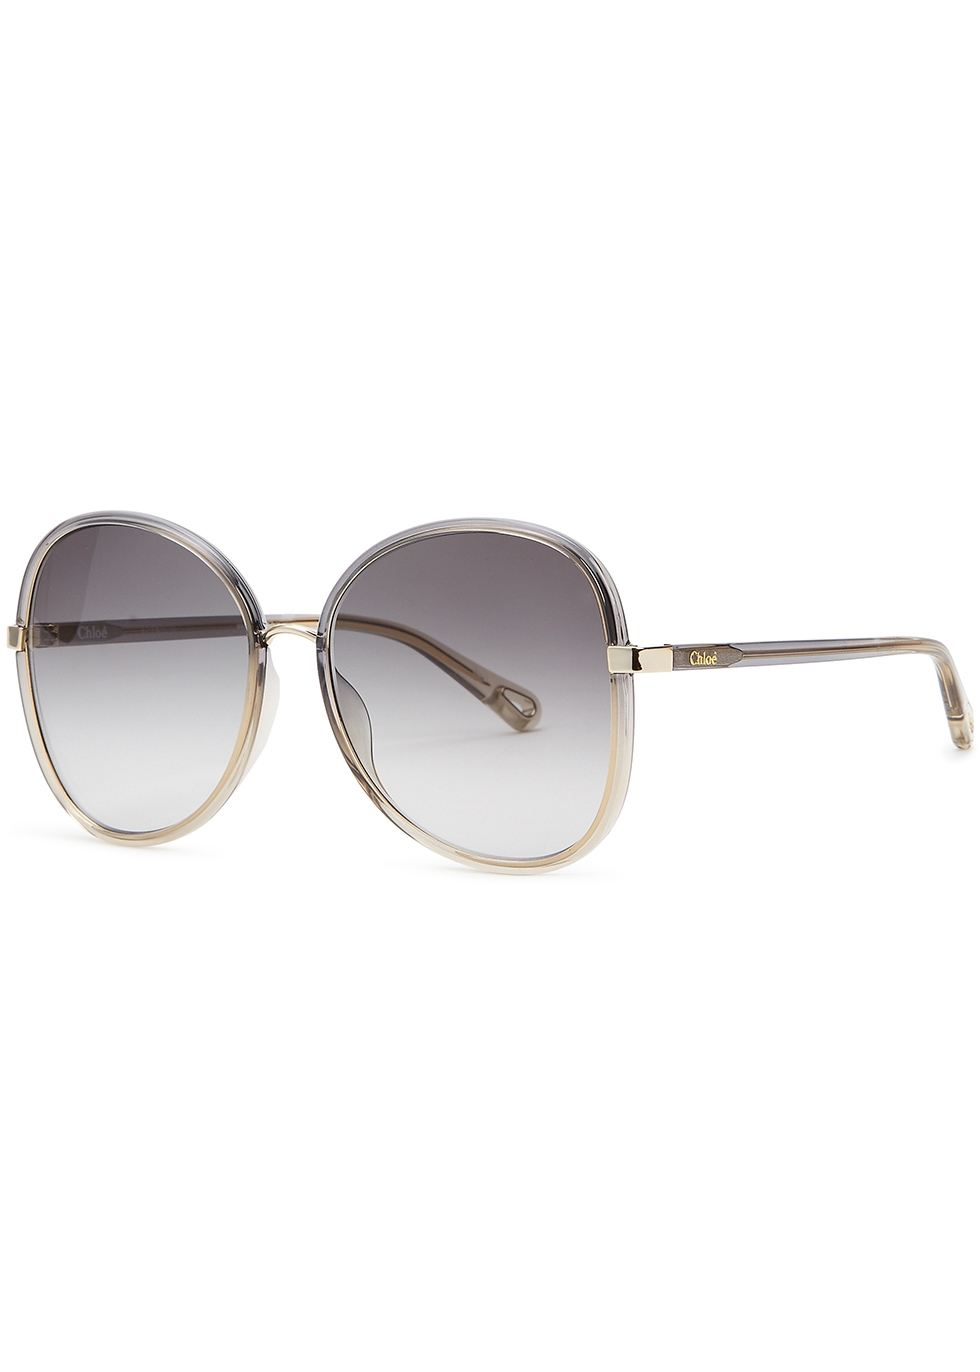 Chloé Franky grey oversized sunglasses - Harvey Nichols